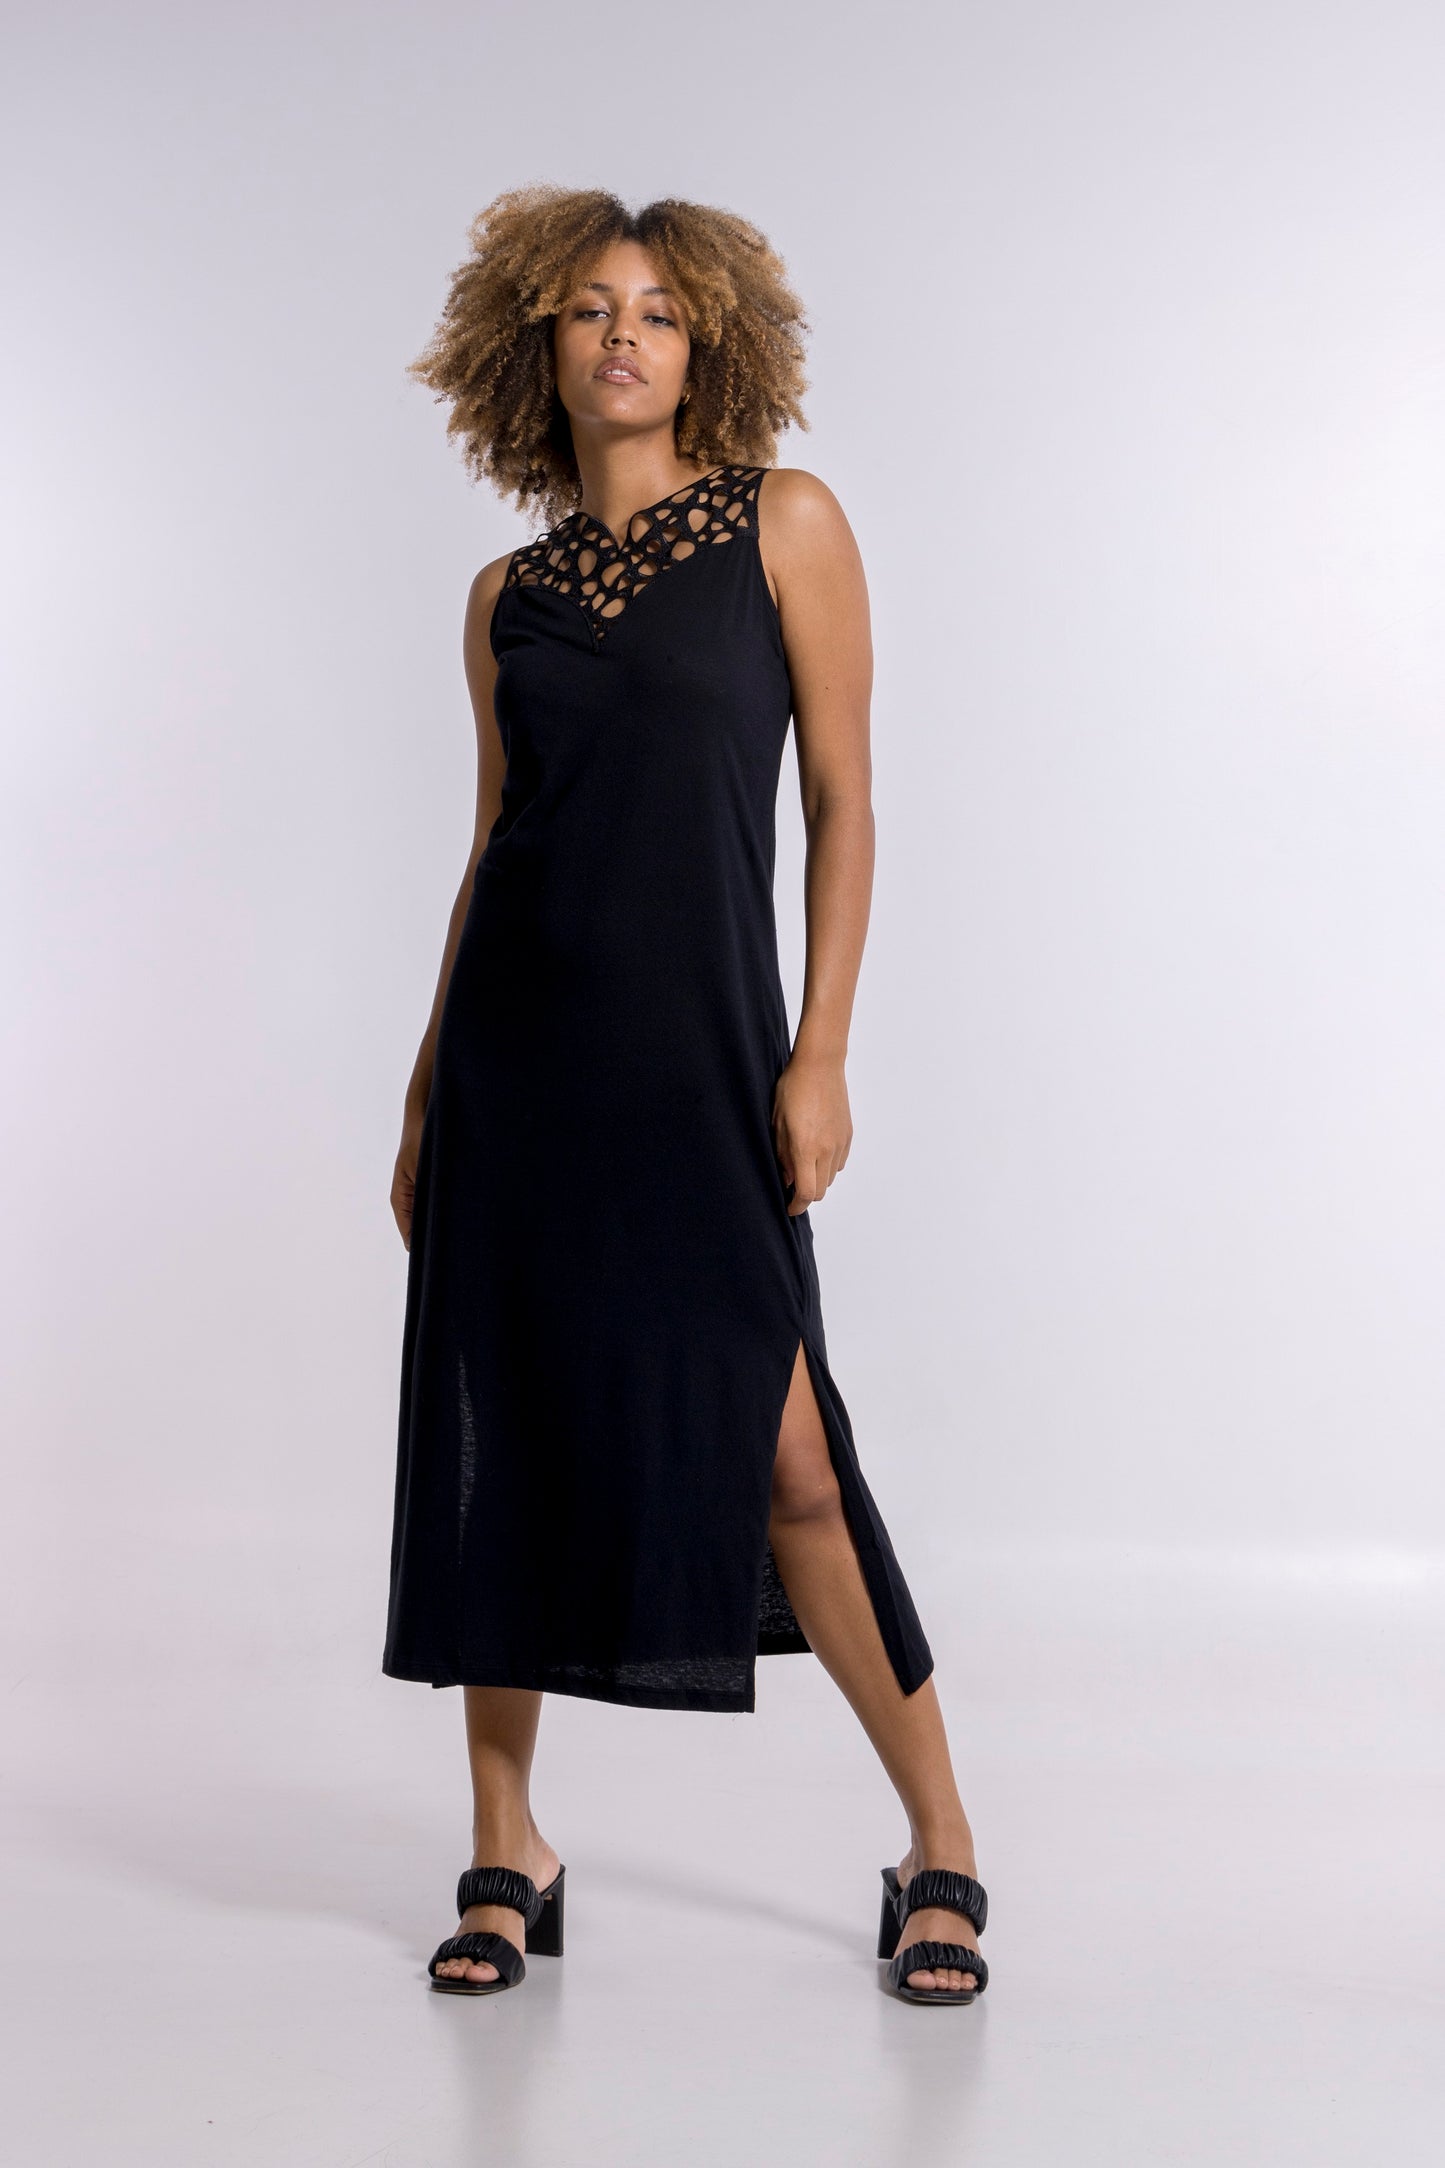 Dress Woman  cotton and Linen 5736 - Oscalito